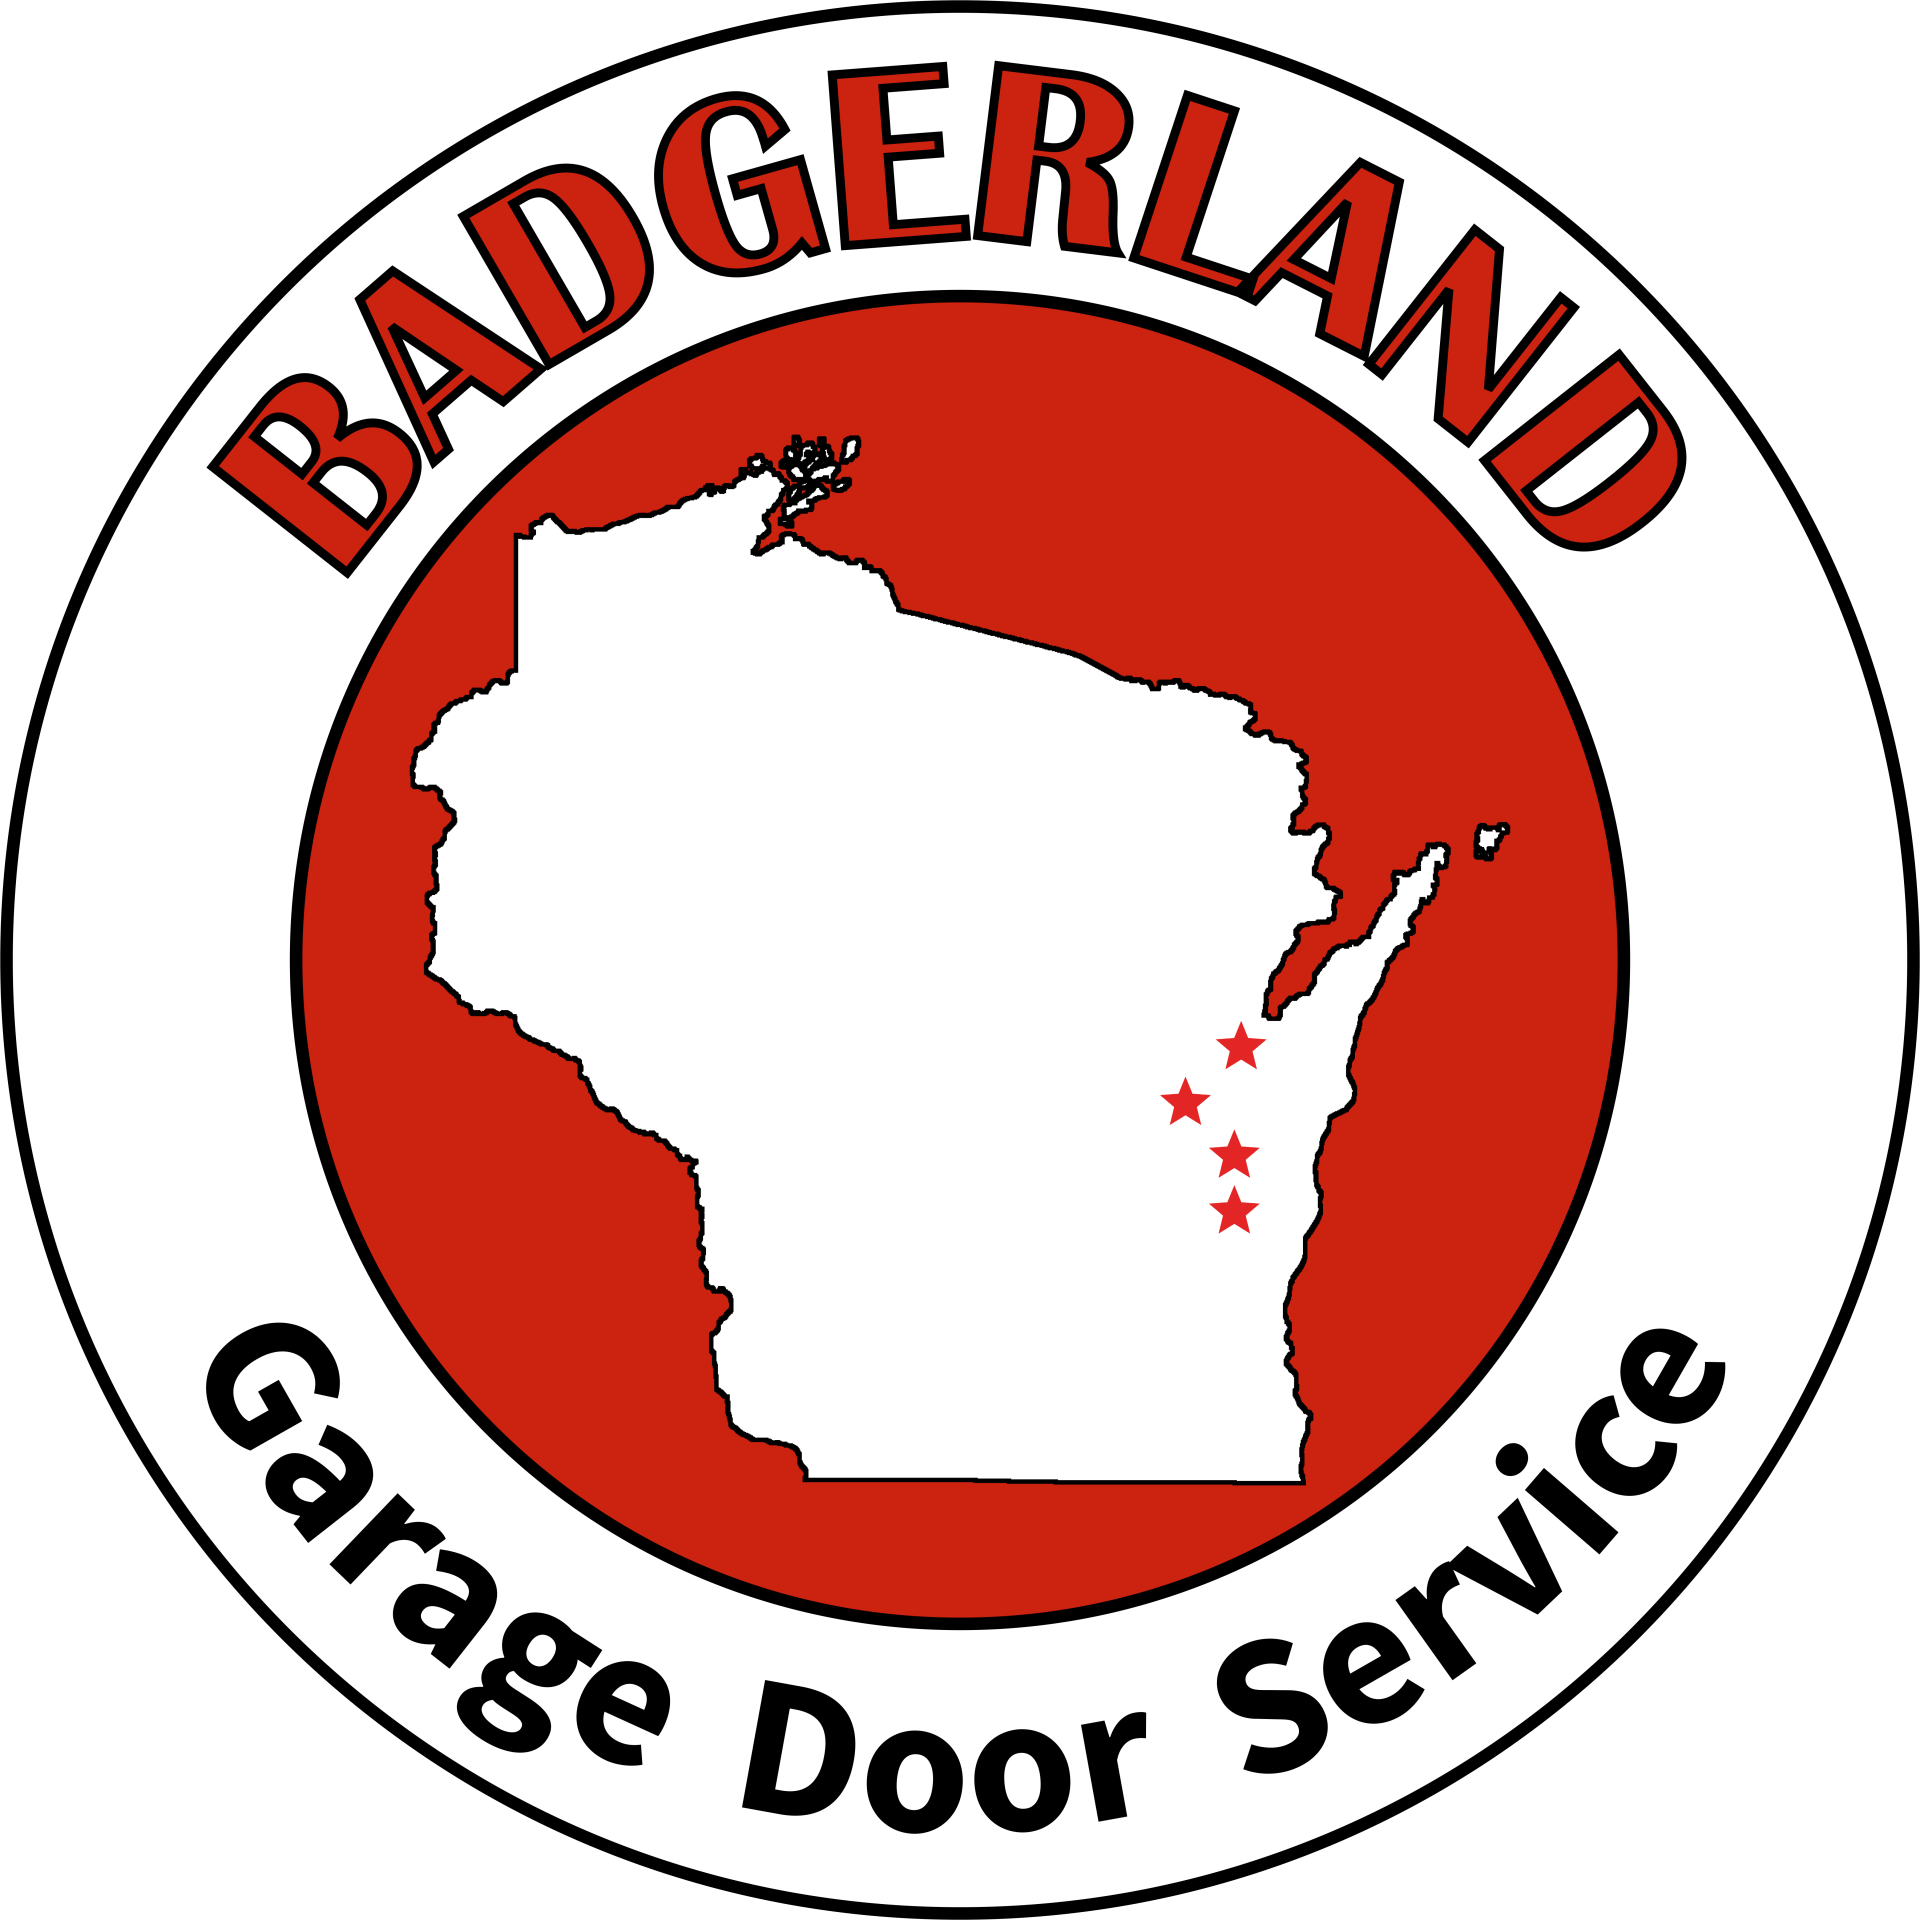 Badgerland Garage Door Service LLC - Logo